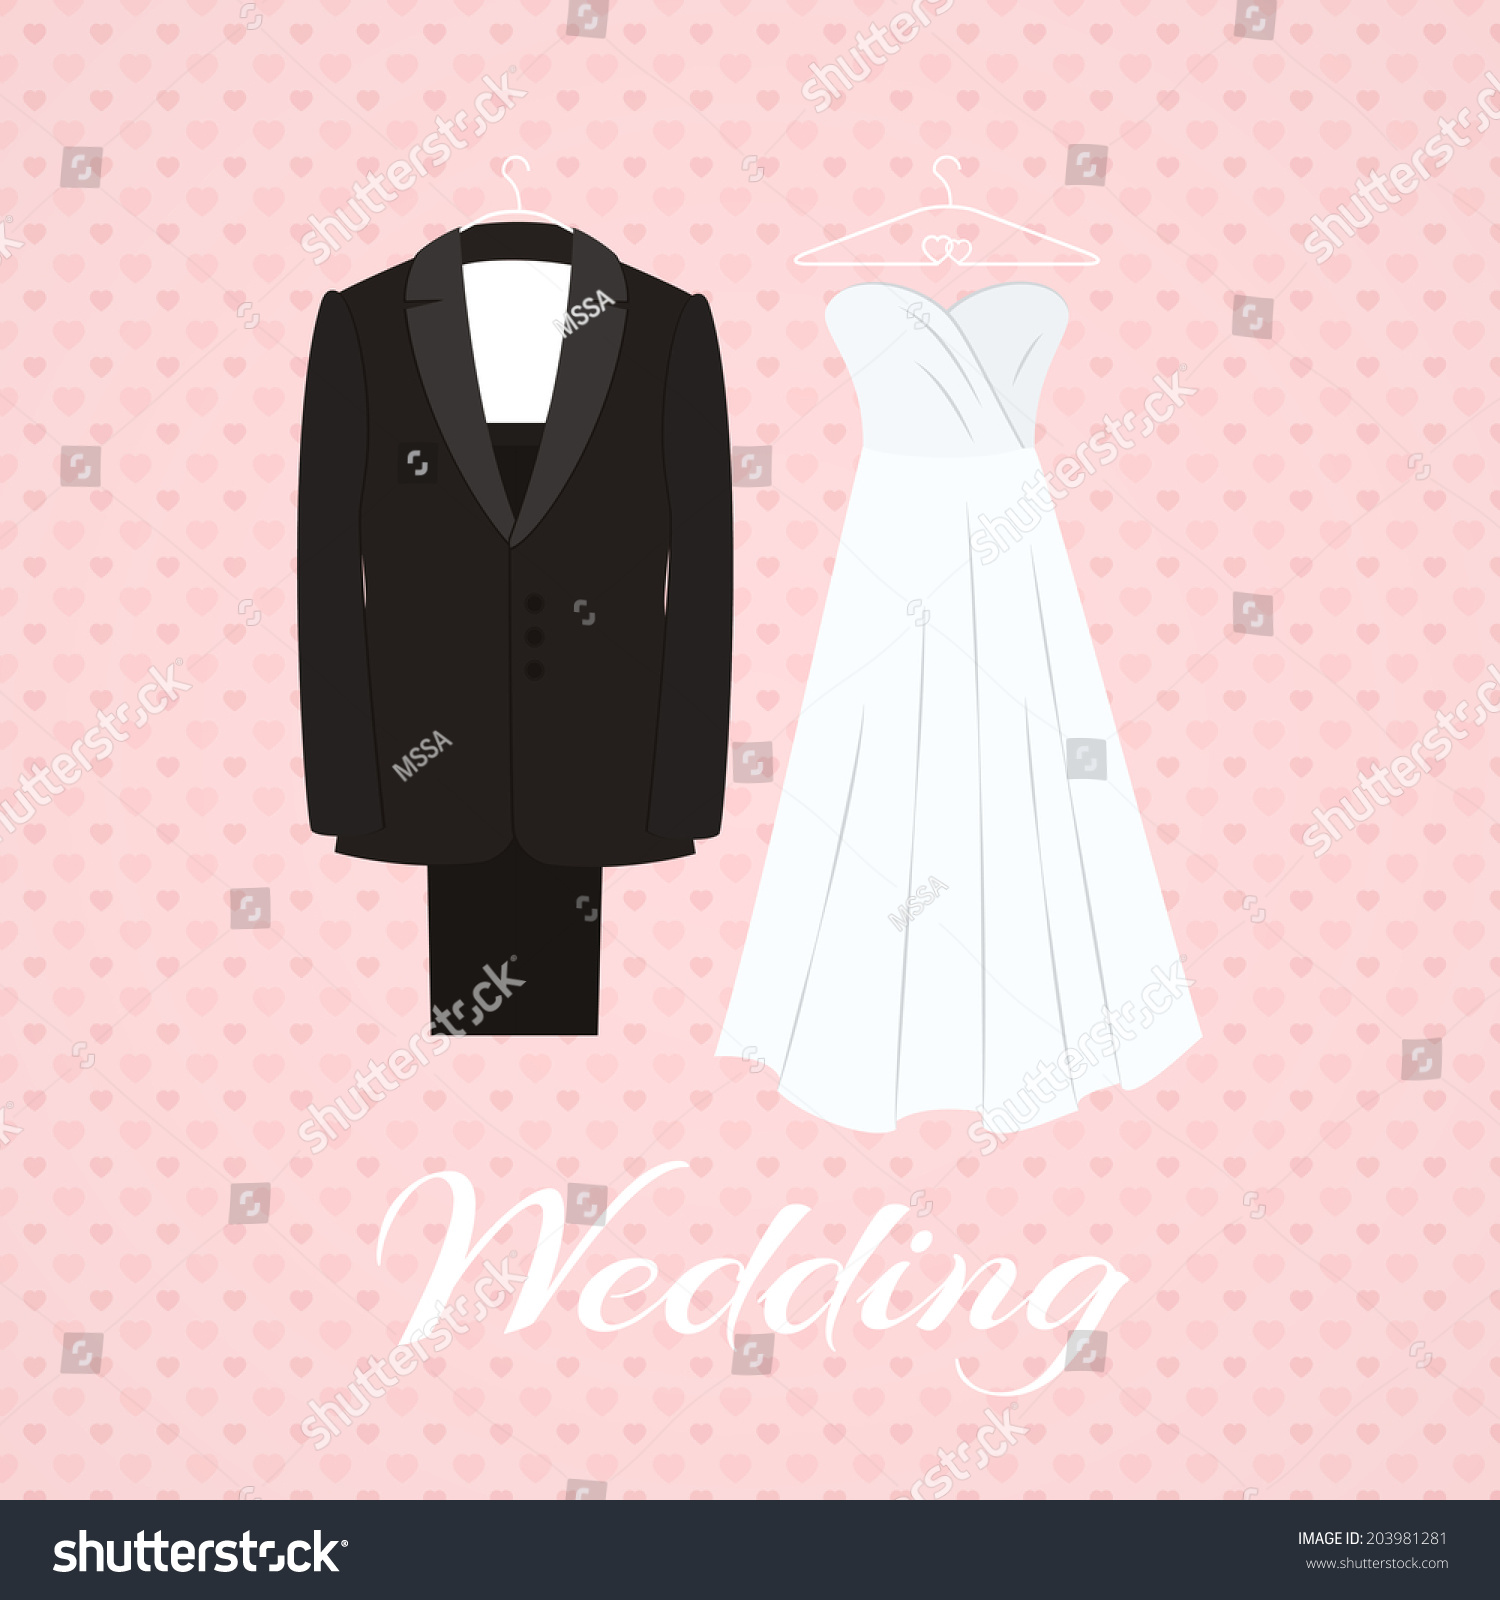 Suit Beside Wedding Dress On Pink Stock Illustration 203981281 ...